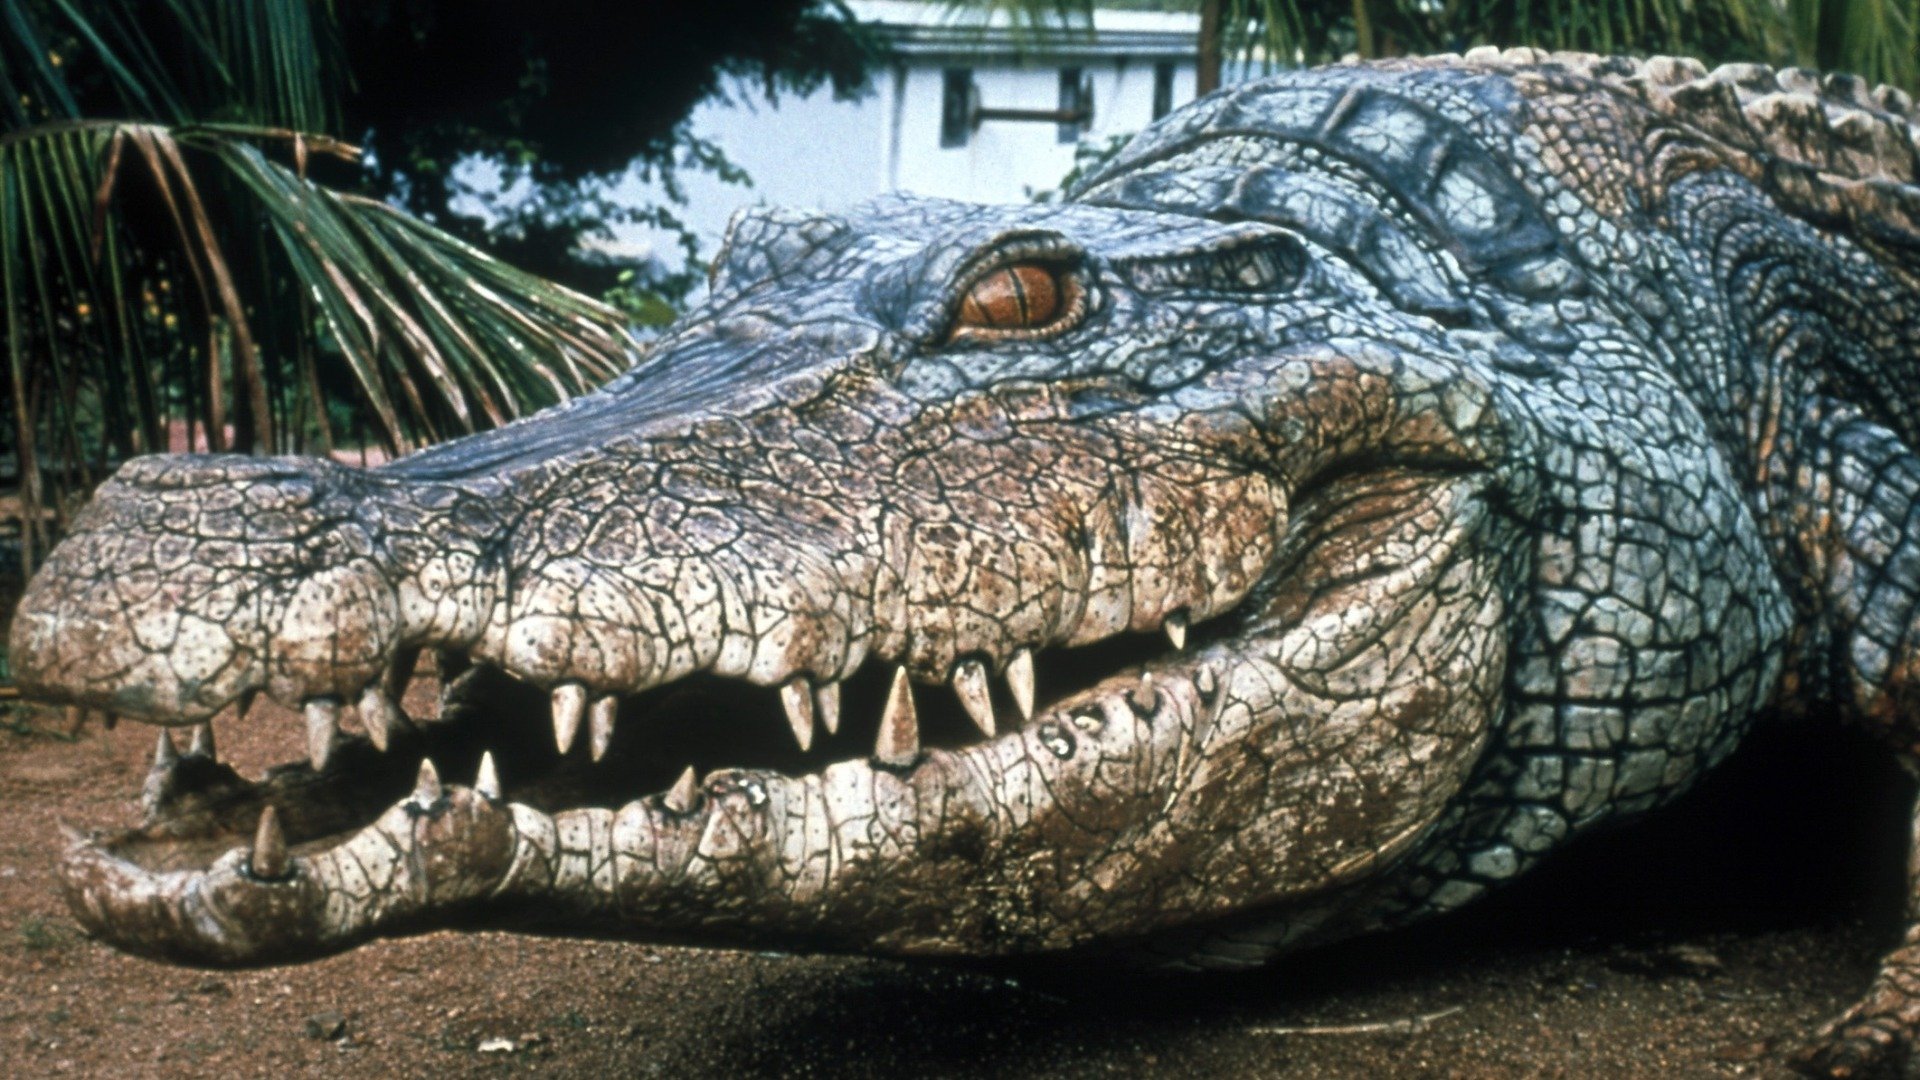 Crocodile 2: Death Roll